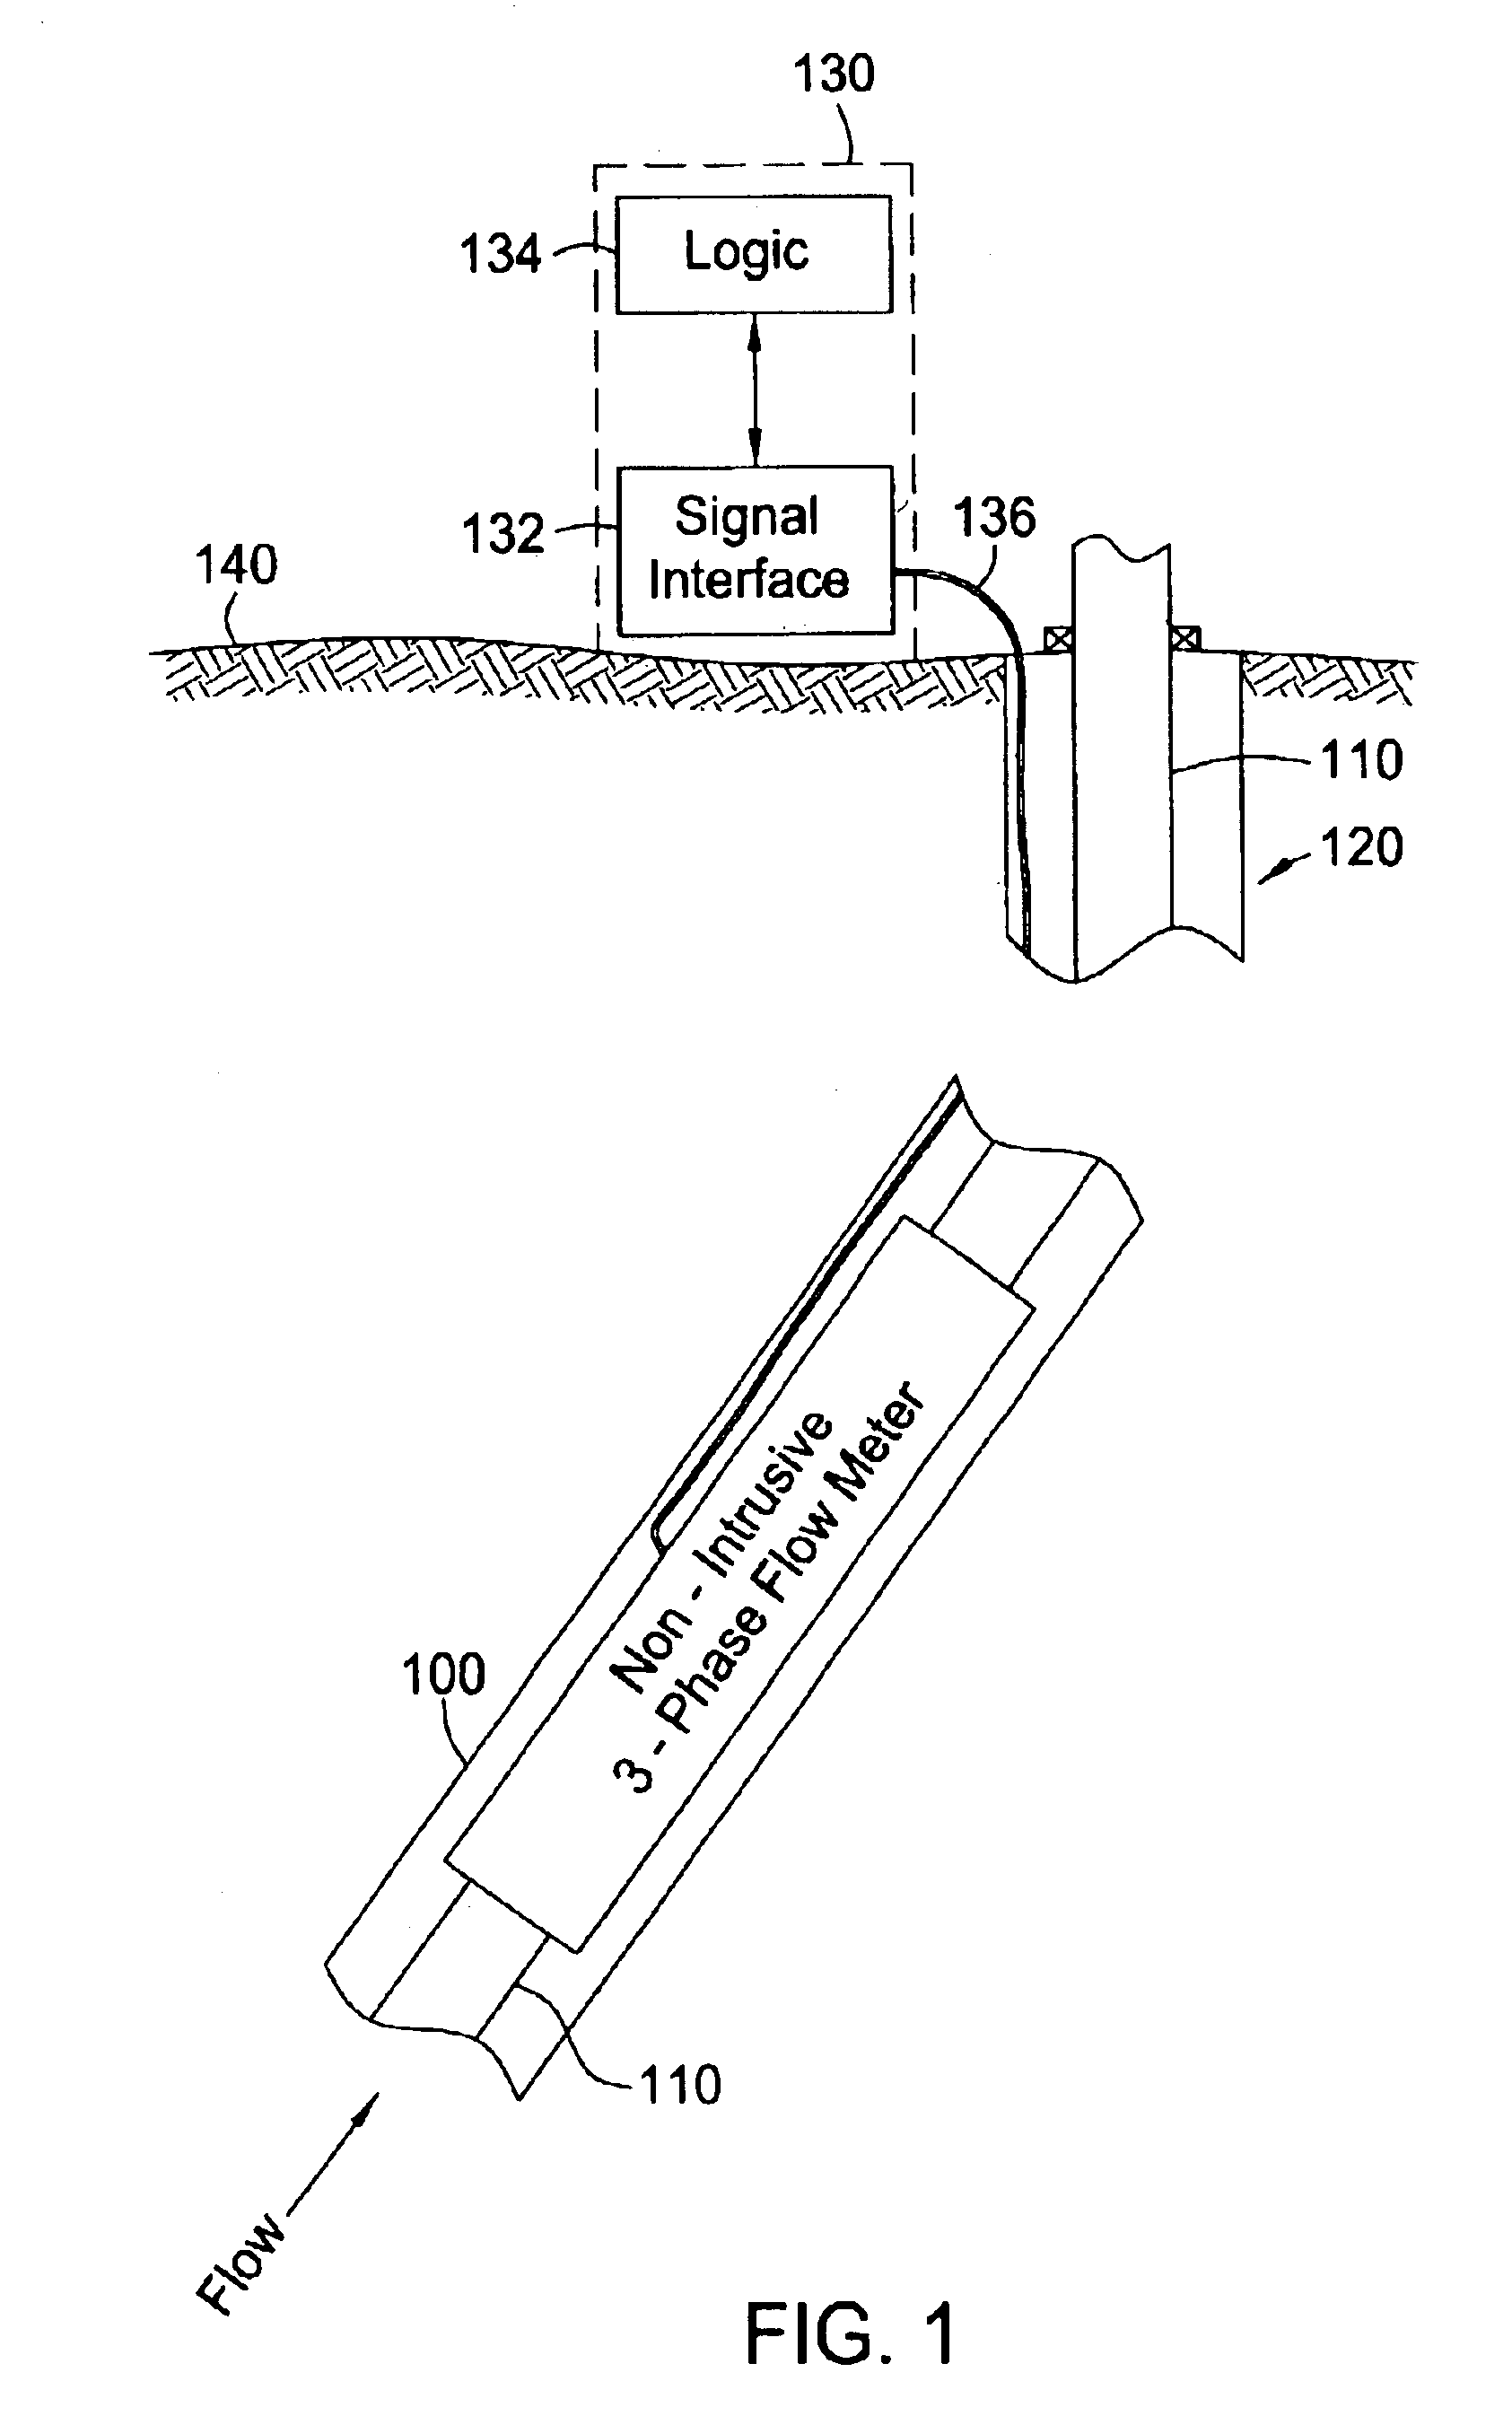 Non-intrusive multiphase flow meter